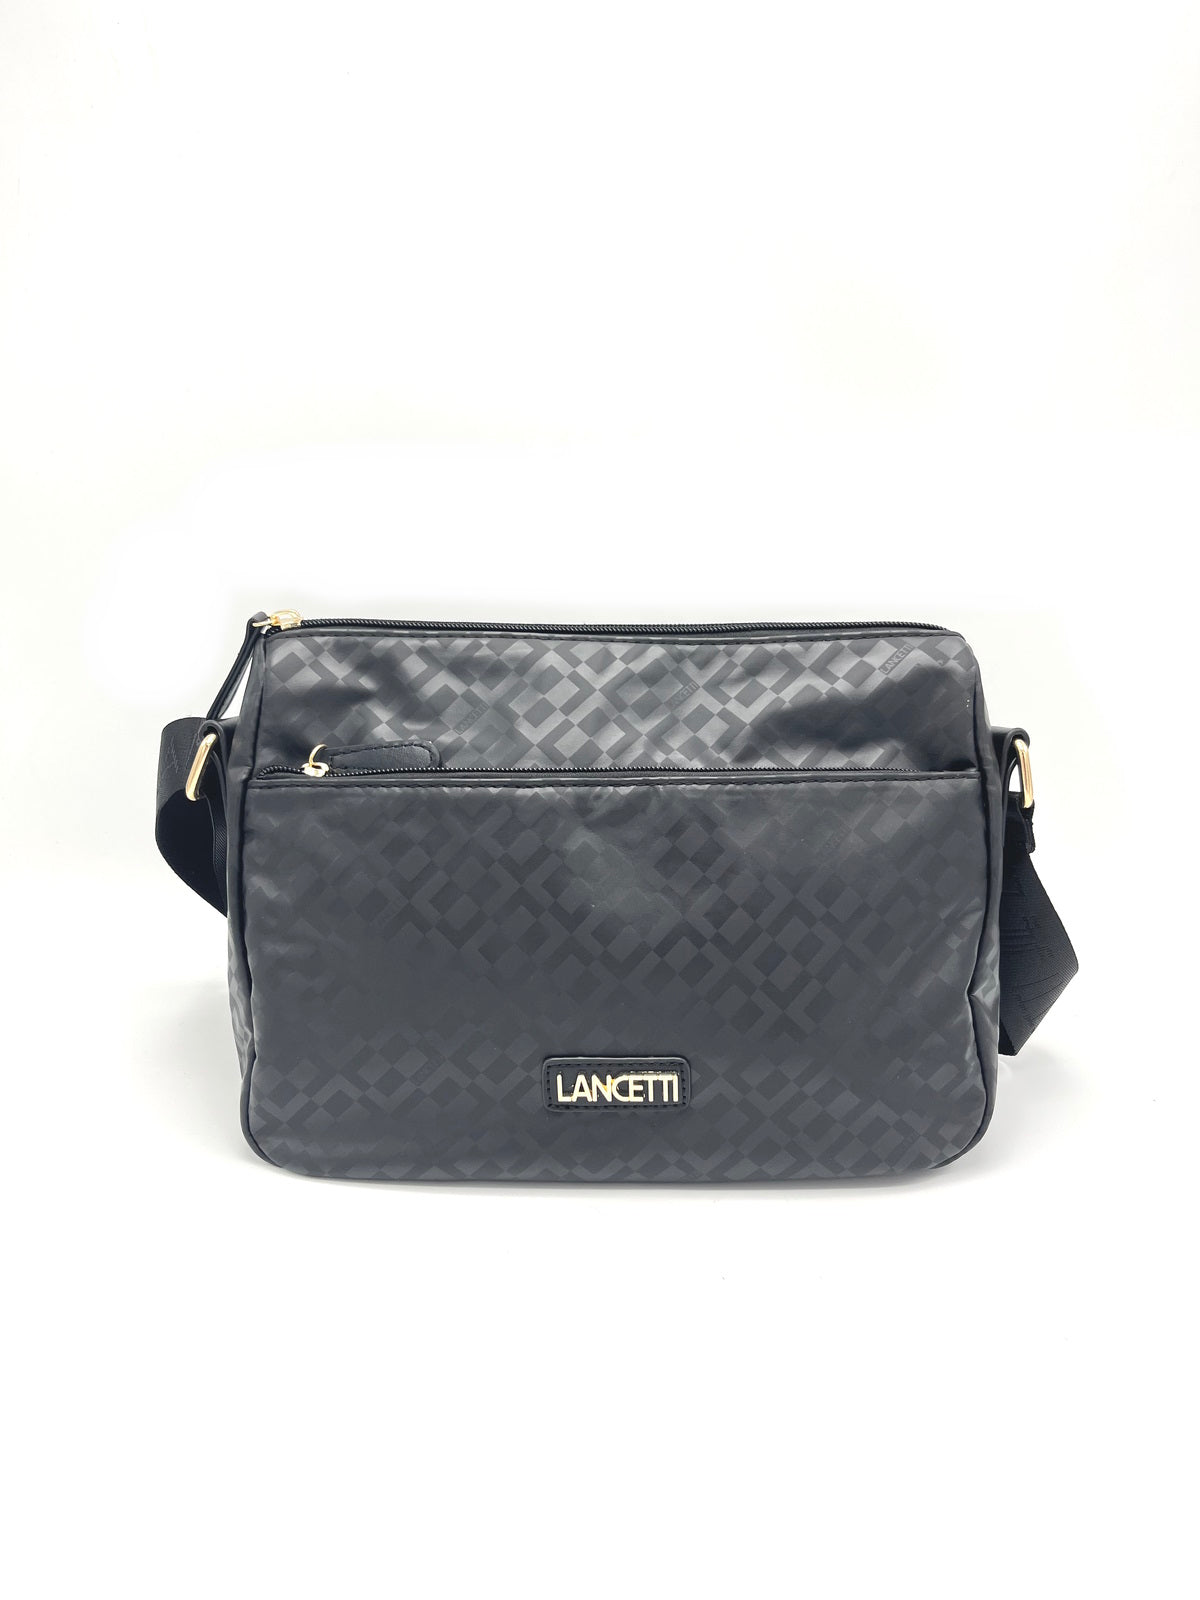 Shoulder bag, brand Lancetti, art. LL100-3.290